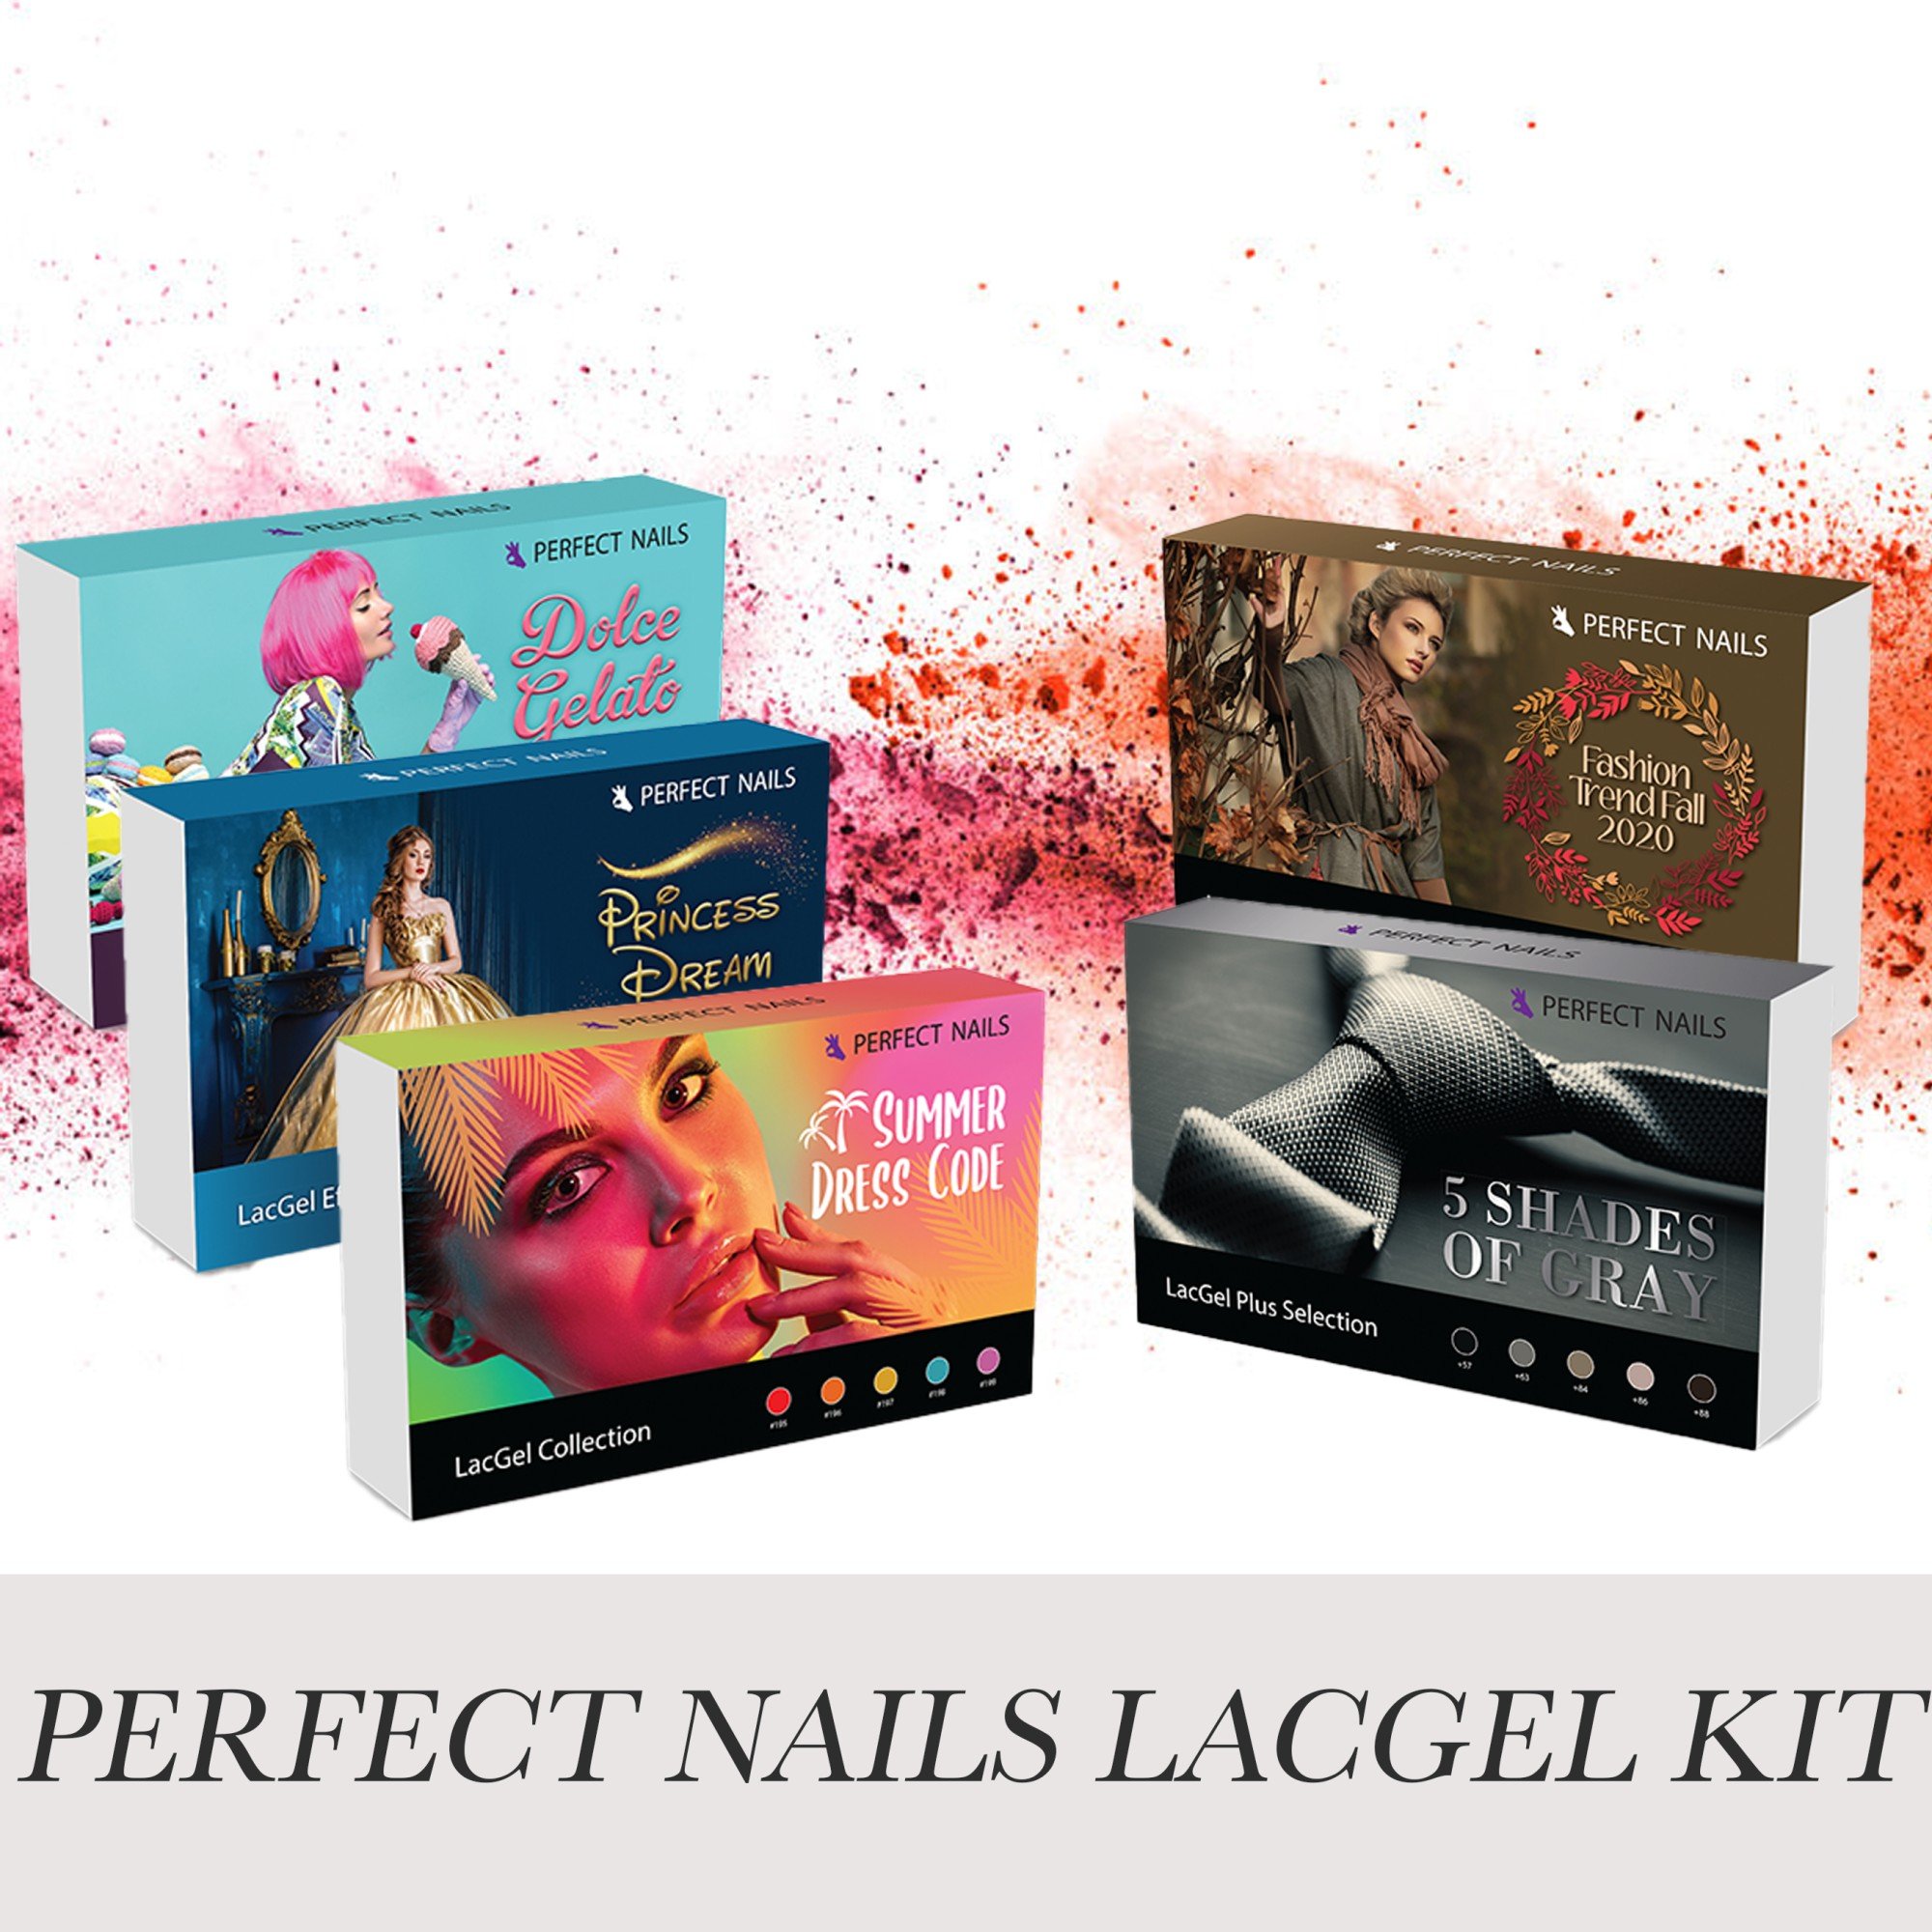 PN LacGel kit - LaLuna PRO AS